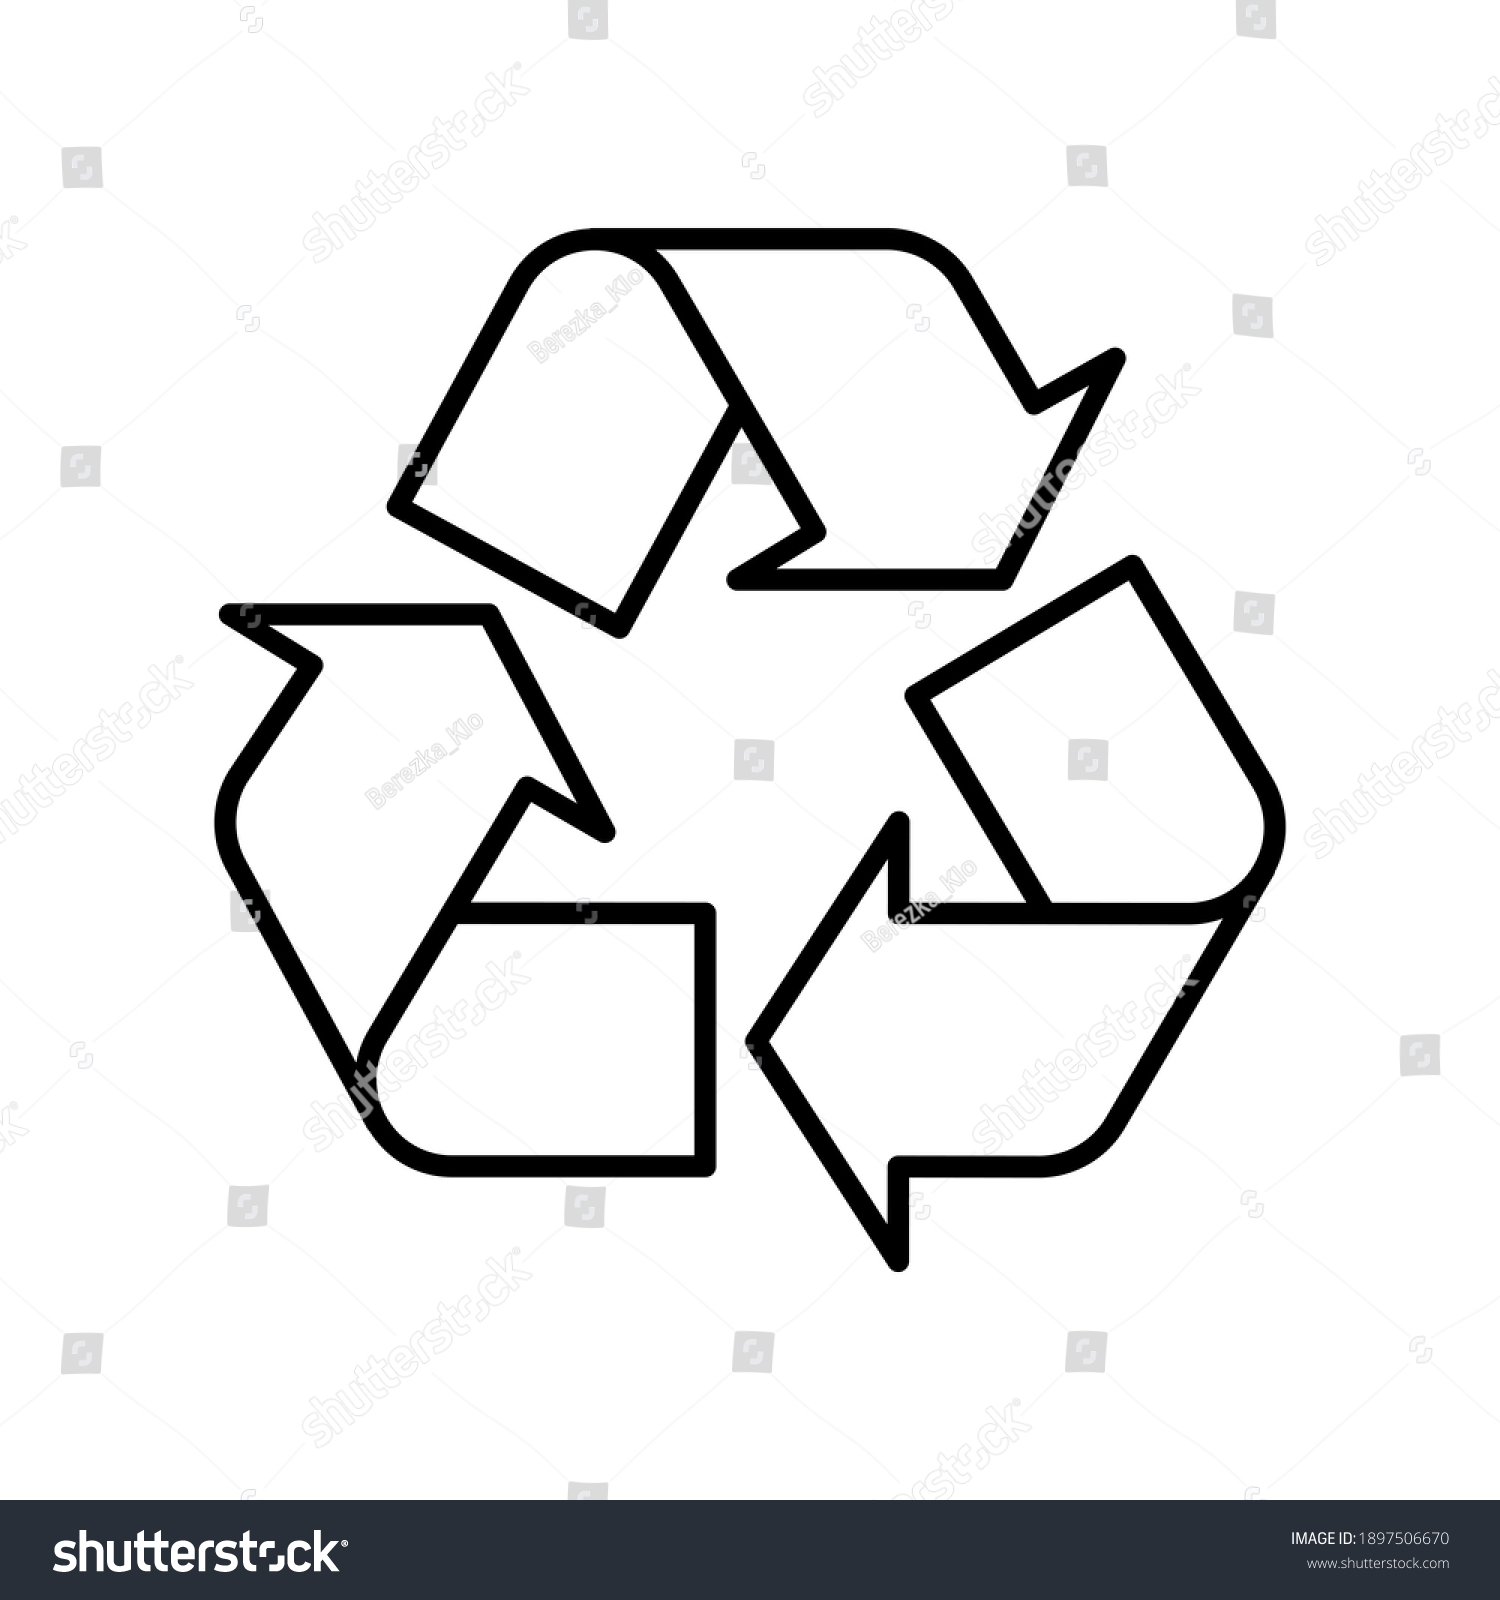 Recycle symbol black outline on white background. Raster illustration #1897506670